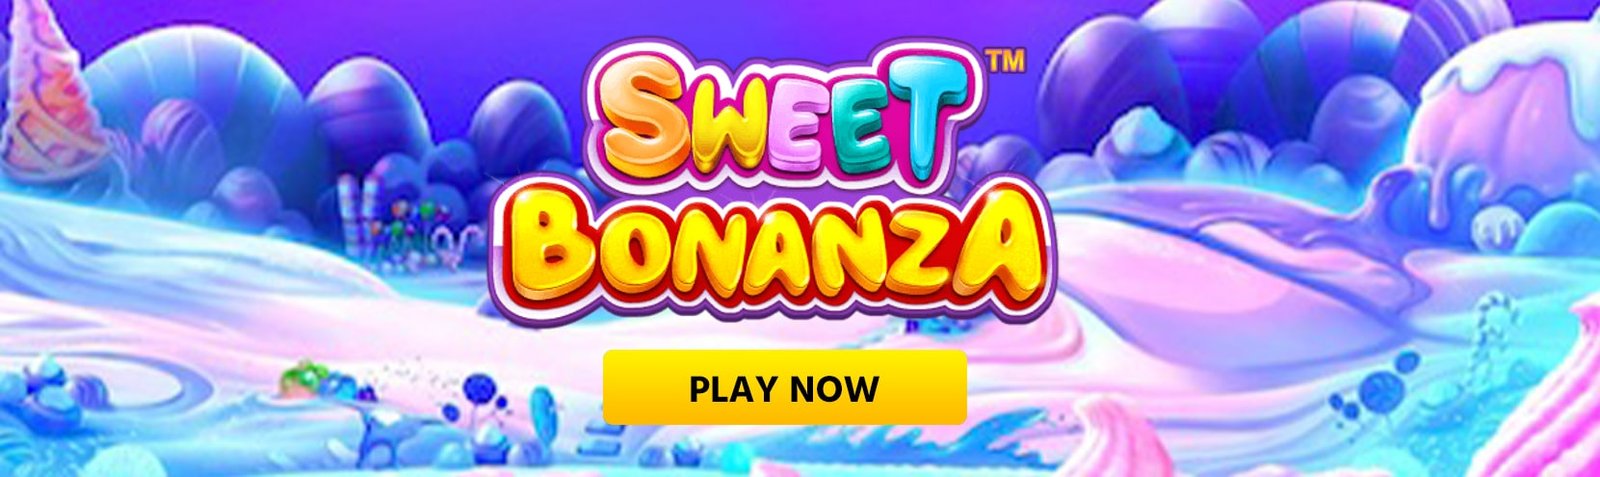 sweet-bonanza1.1